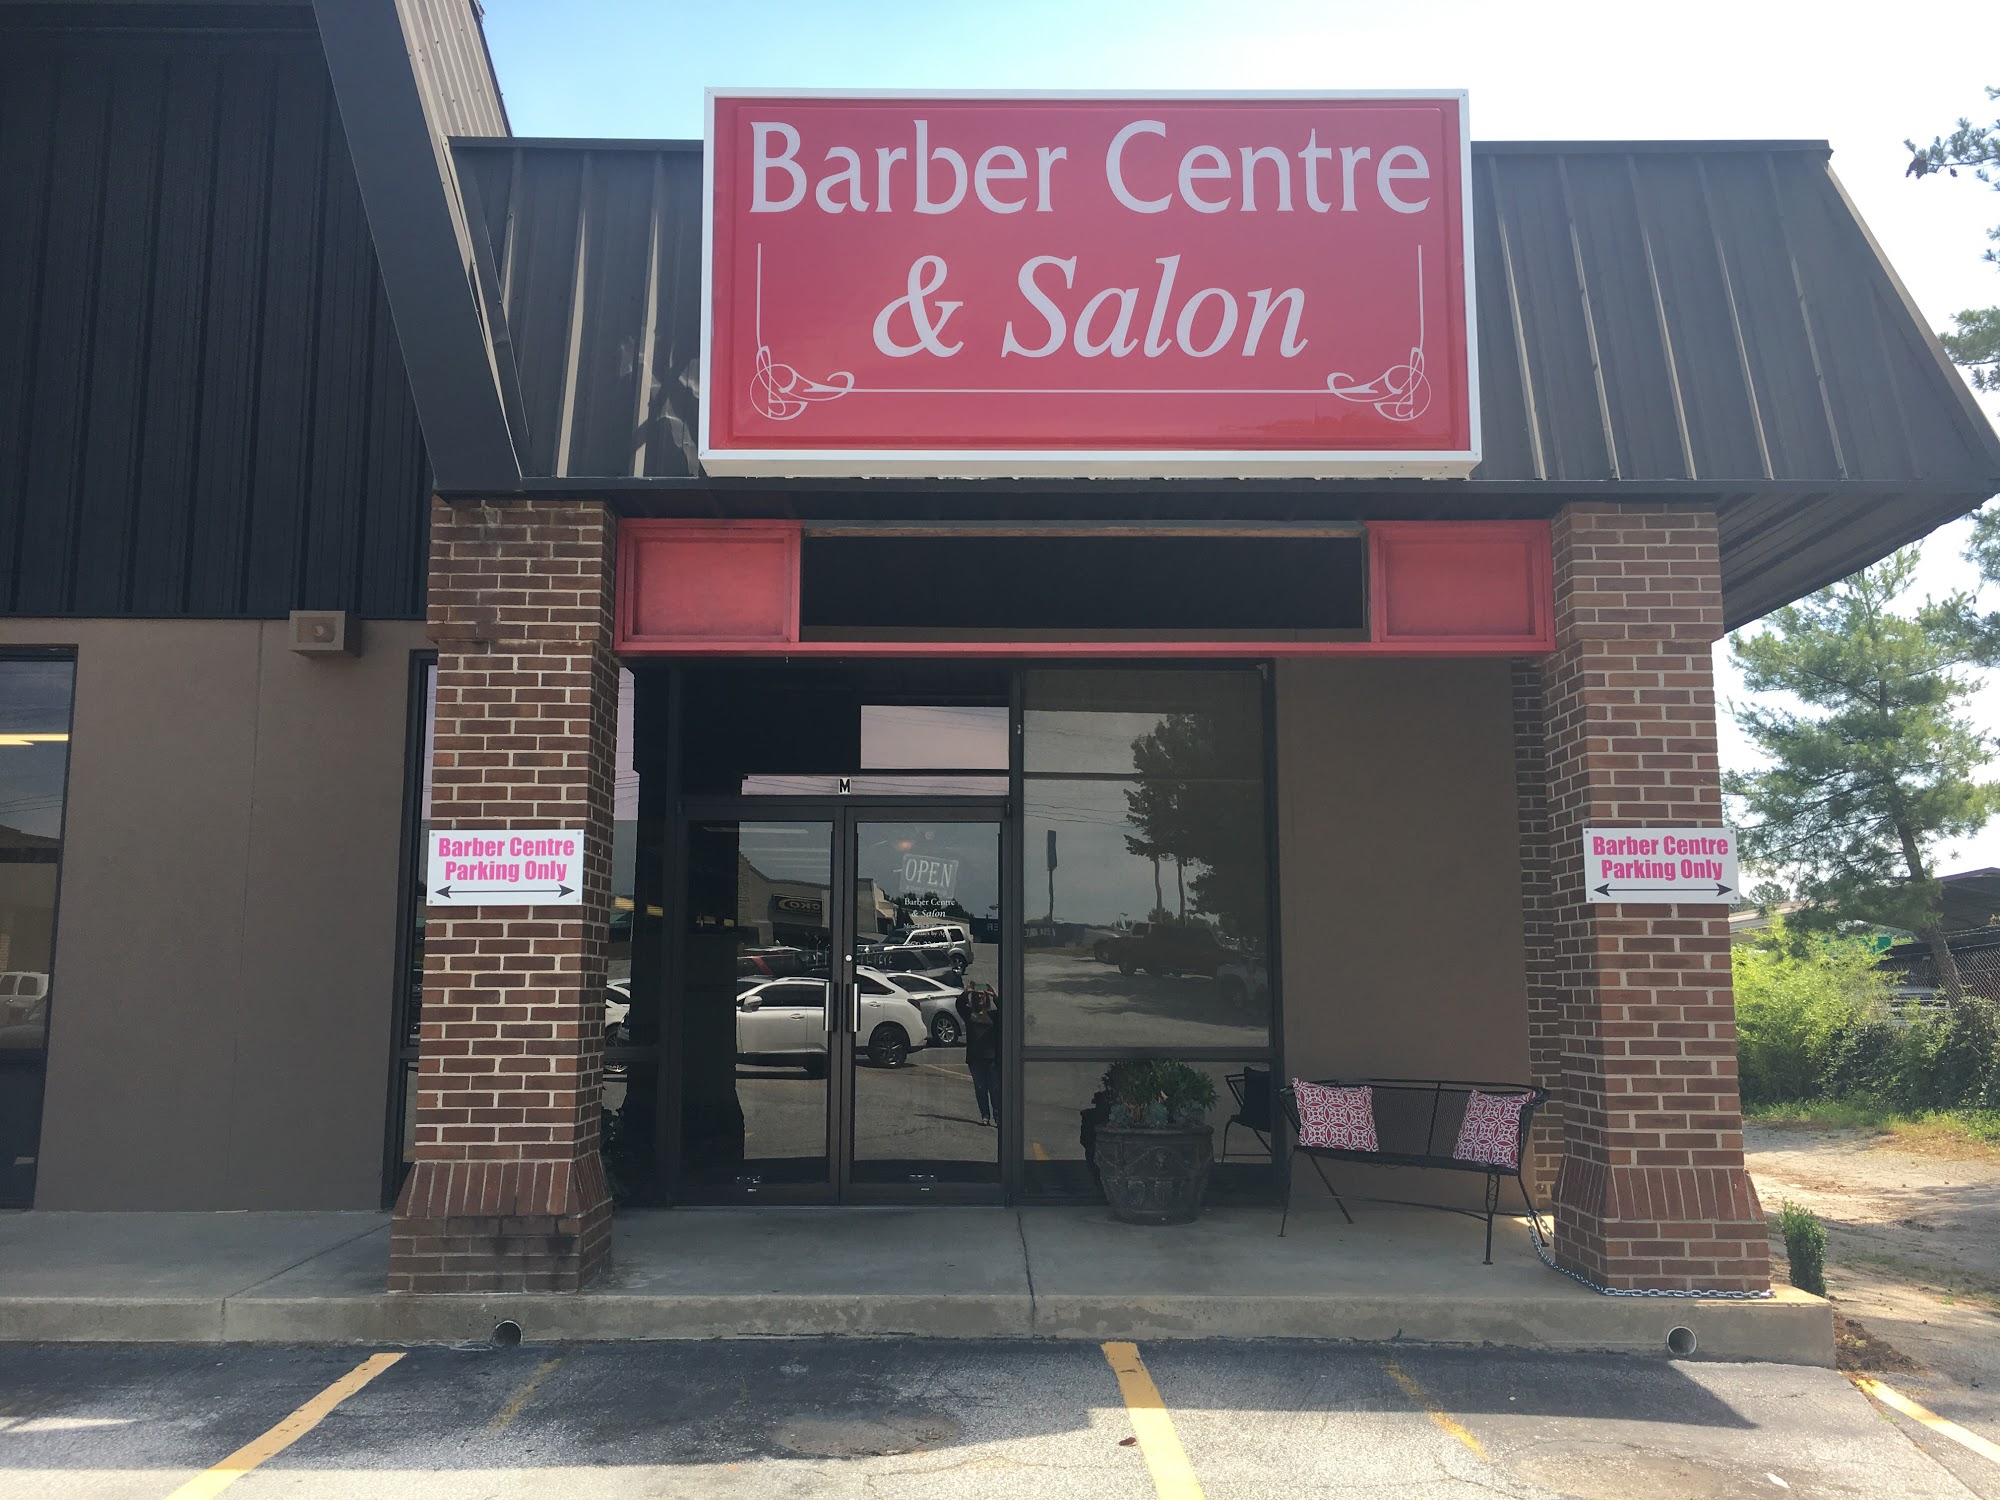 The Barber Centre and Salon